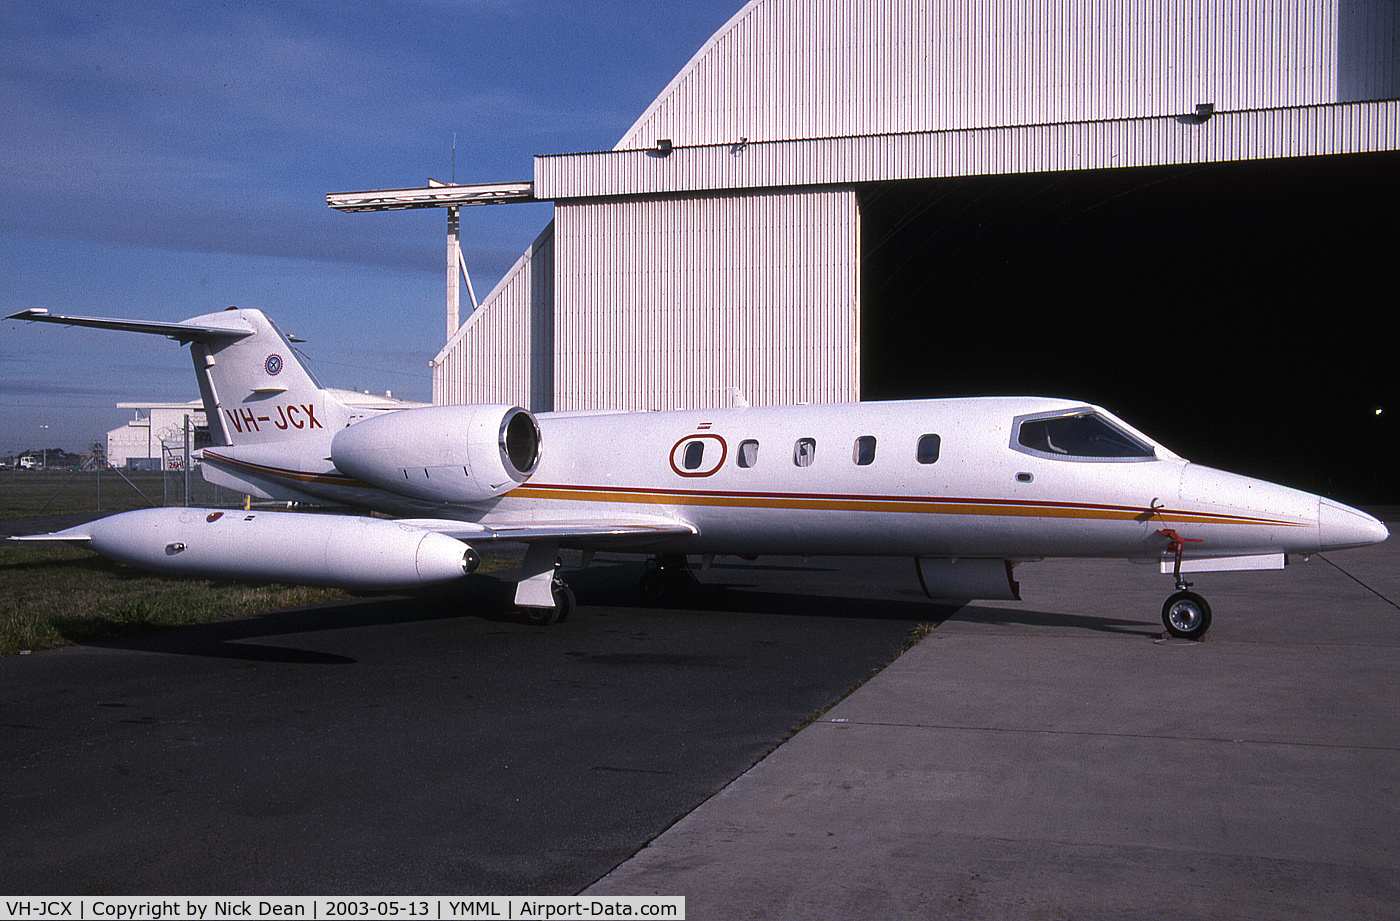 VH-JCX, 1986 Gates Learjet 36A C/N 36A-057, YMML